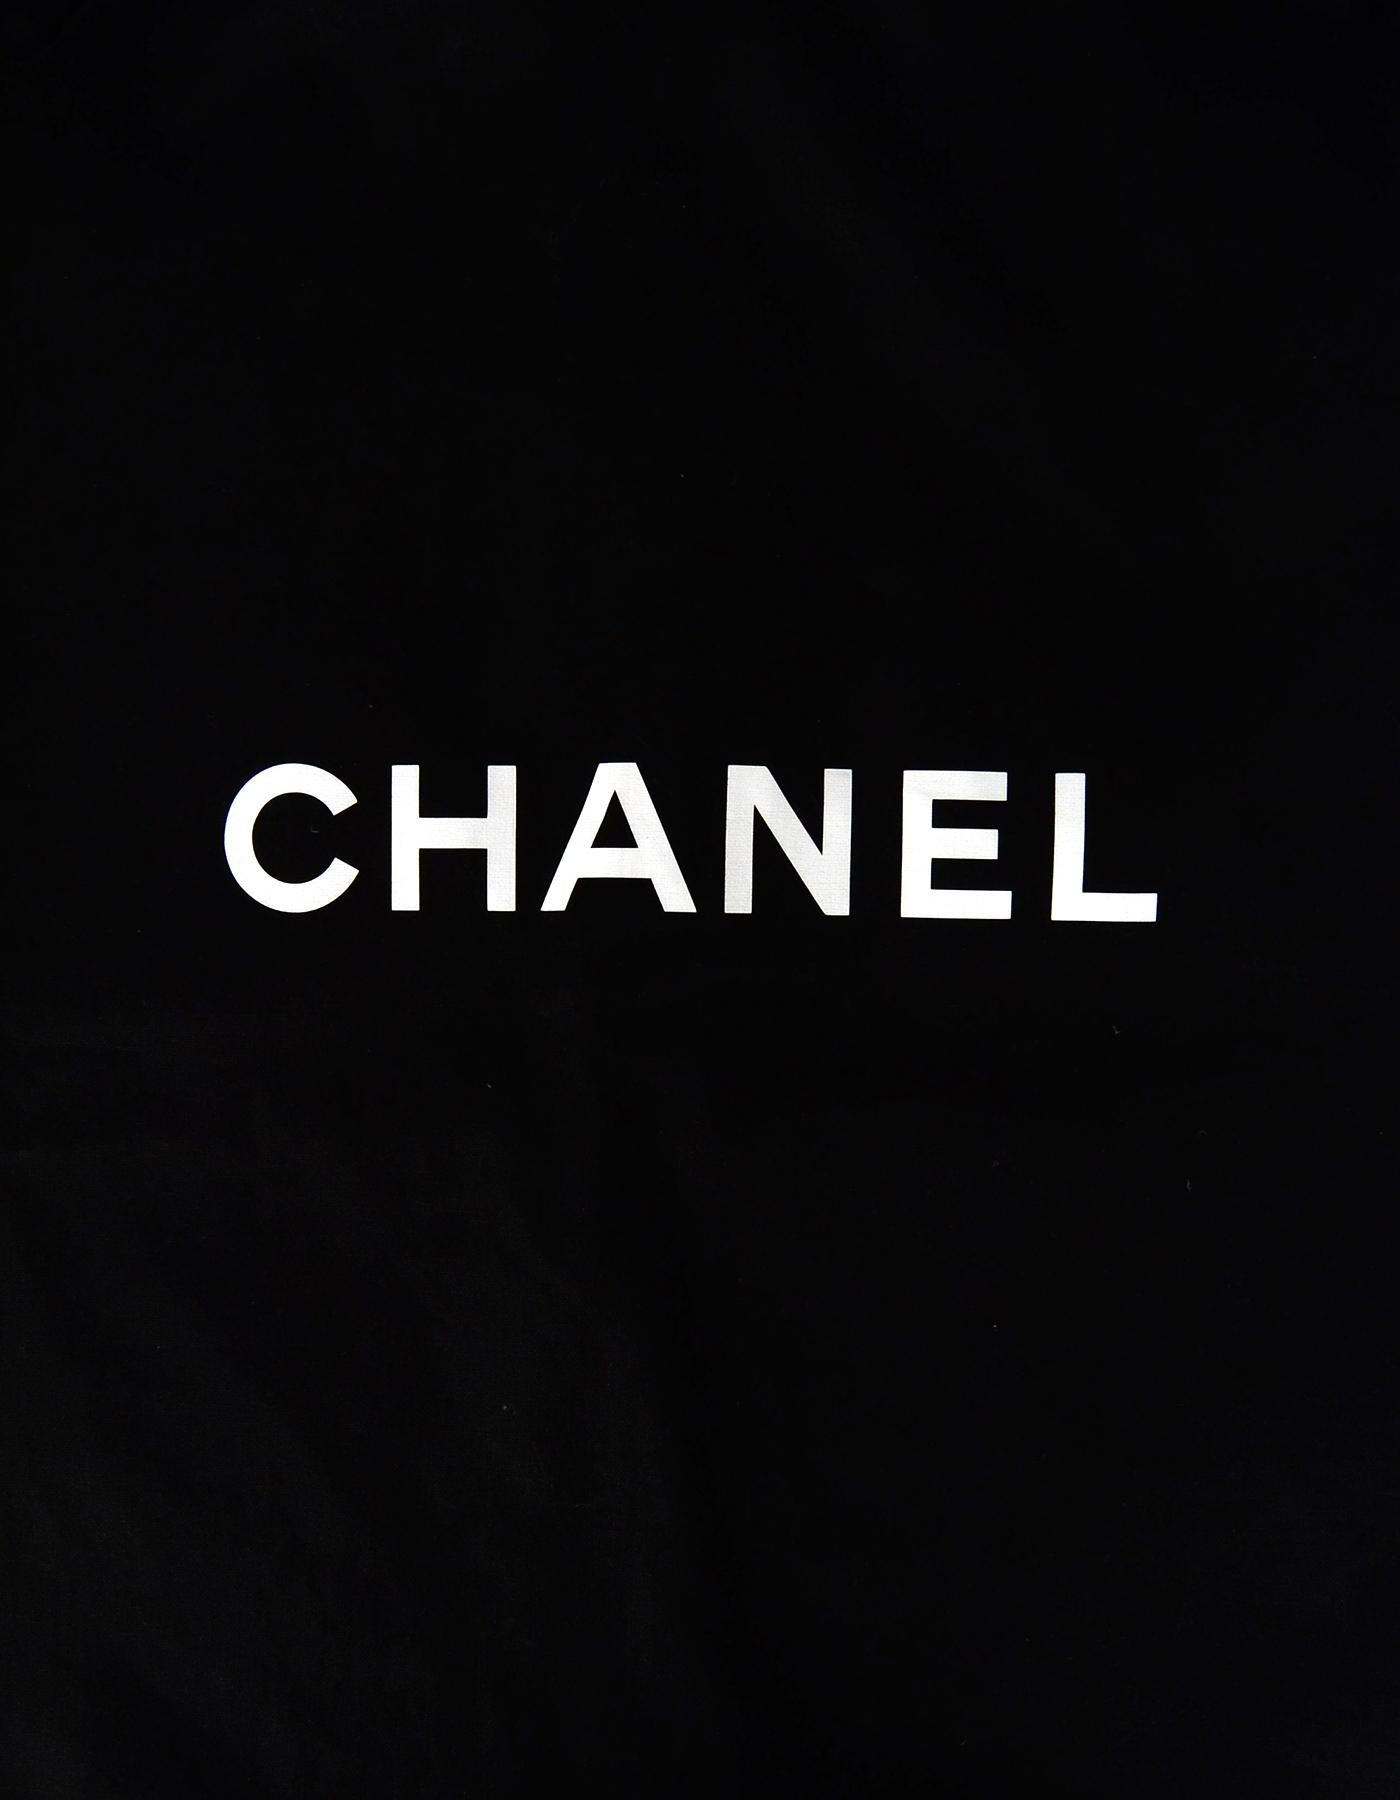 Chanel Logo Black Canvas Garment Bag & Coat CC Velvet Hanger Set

Color: Black, white, gold
Hardware: Goldtone
Materials: Canvas, metal, plastic, velvet
Closure/Opening: Back zipper
Overall Condition: Excellent pre-owned condition 
Includes:  Canvas